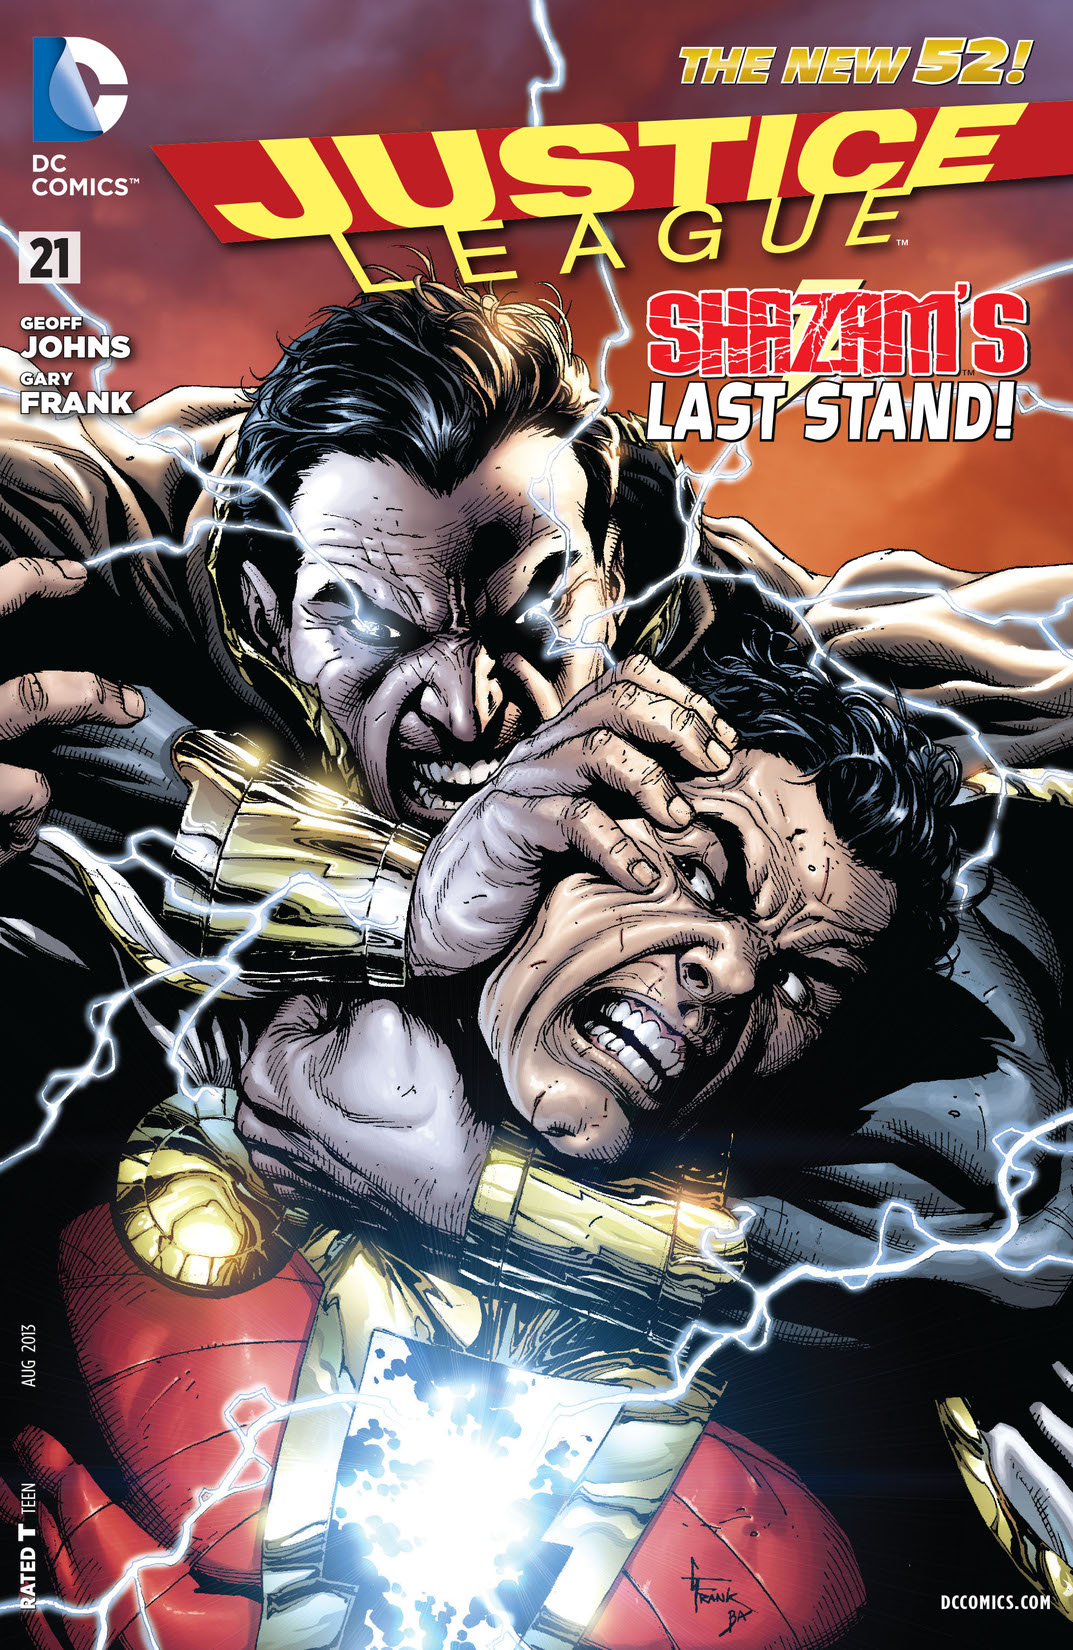 Justice League (2011-) #21 preview images